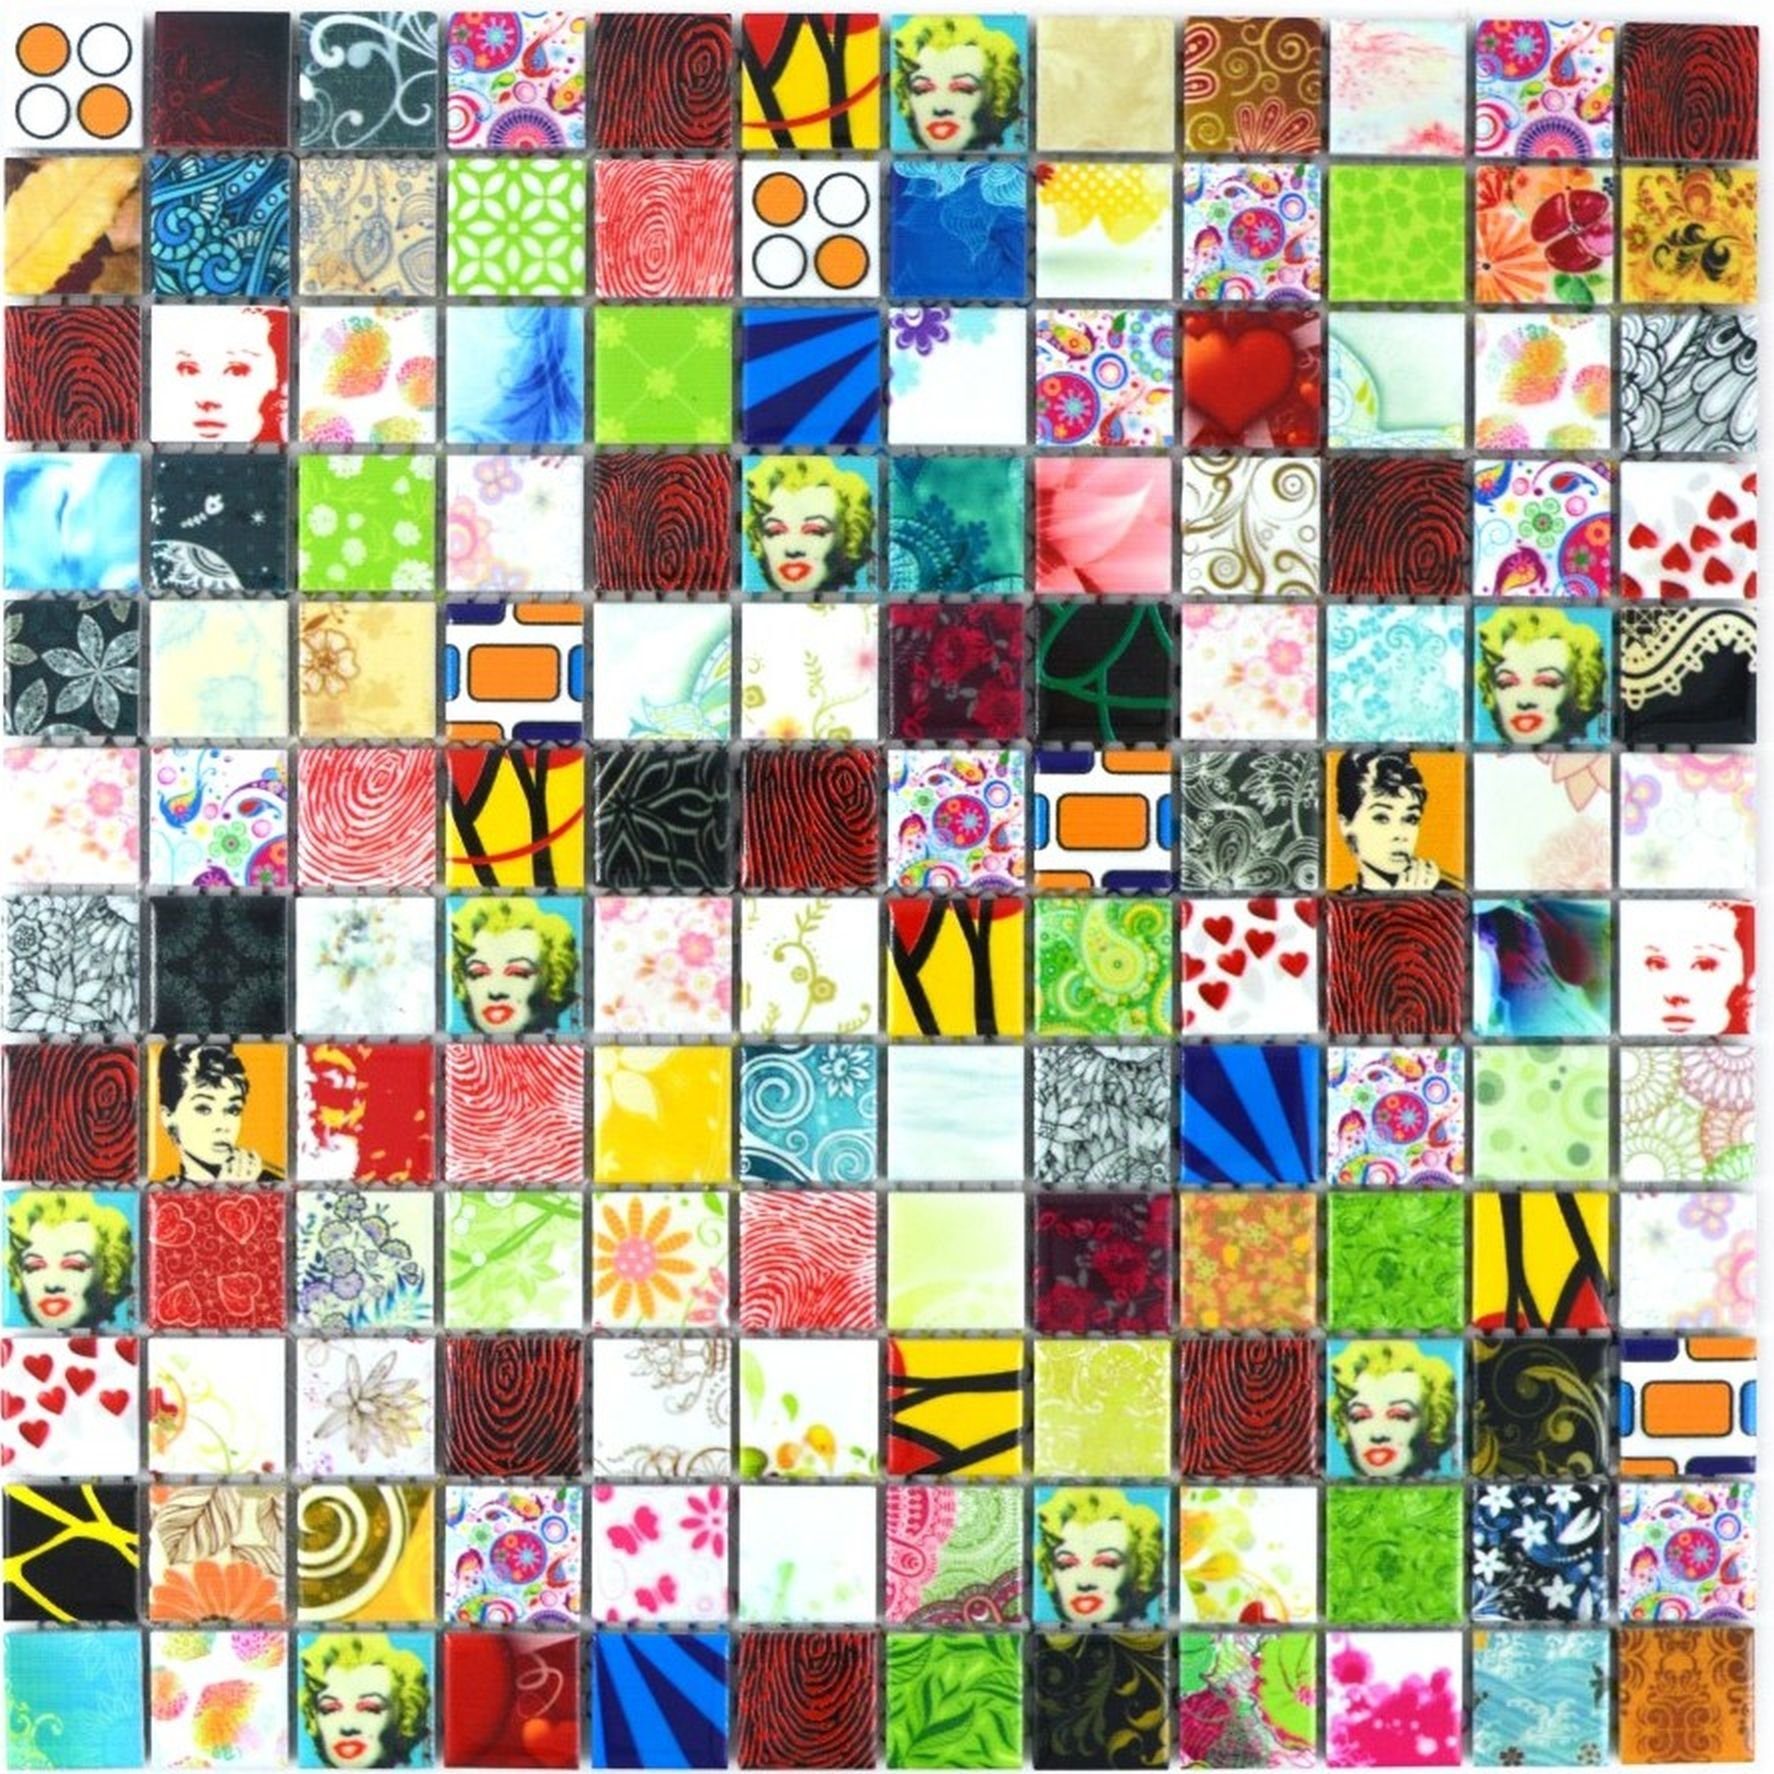 Mosani Mosaikfliesen Quadratisches glänzend bunt Mosaikfliesen / Keramikmosaik 10 Matten